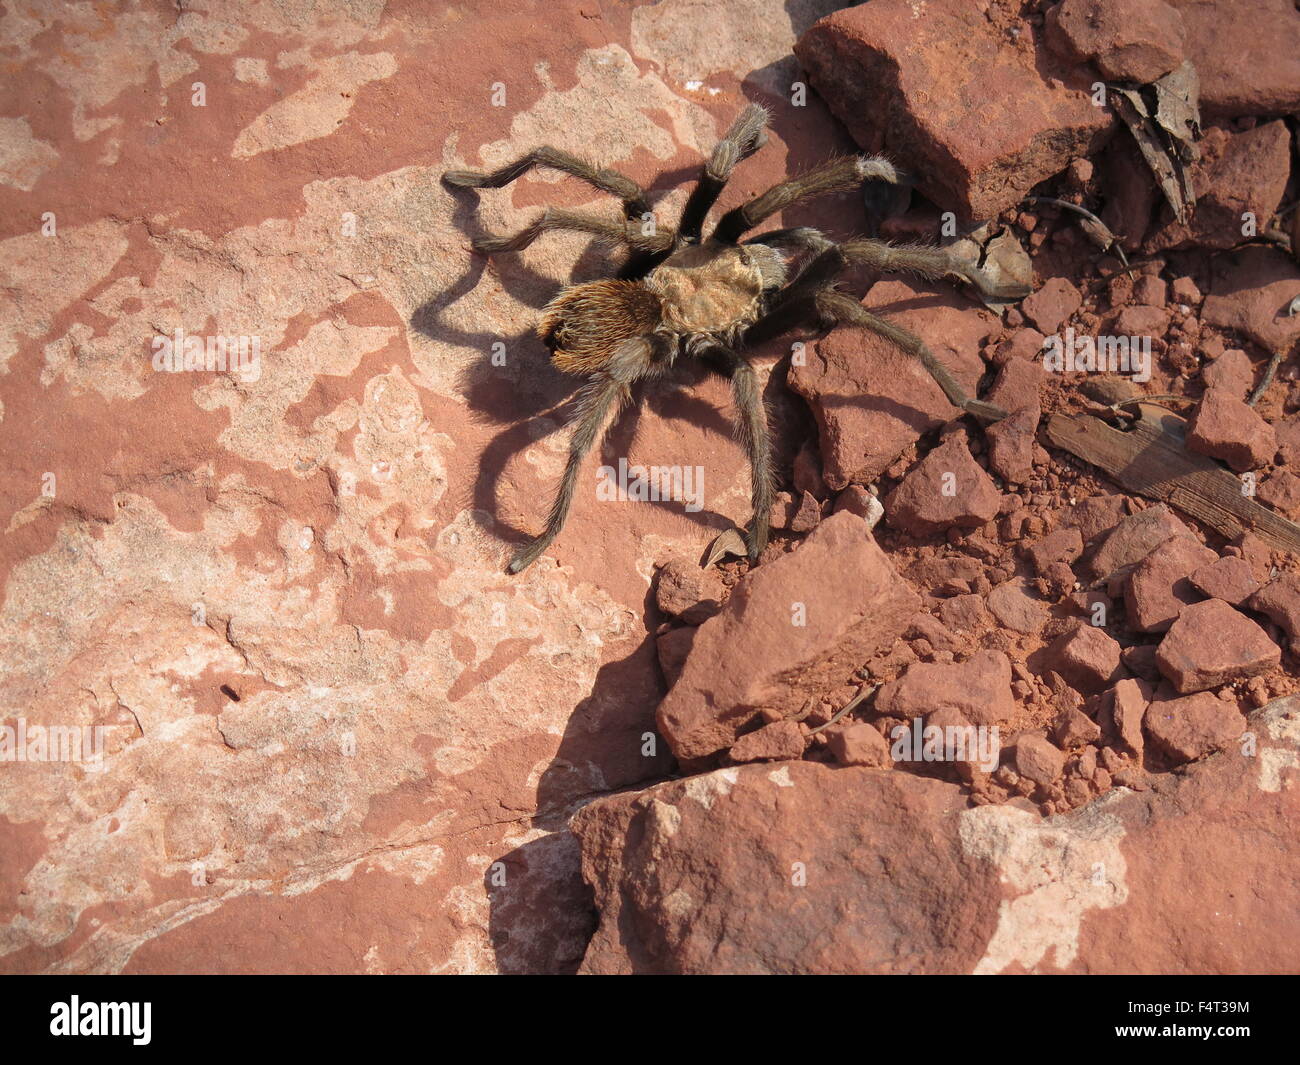 Tarantula walking on rocks in desert Stock Photo